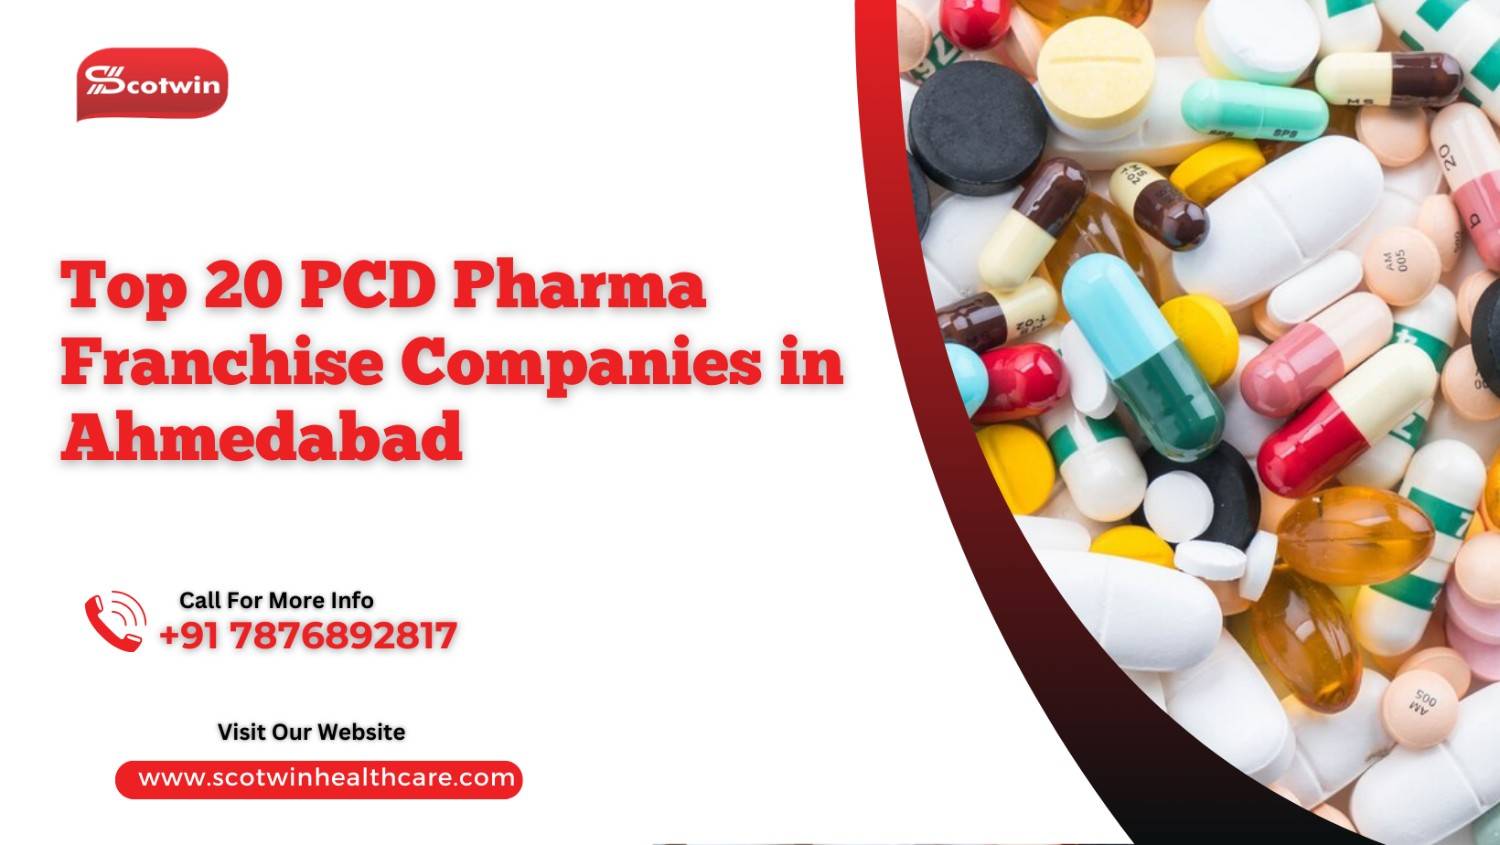 PCD Pharma Franchise Companies in Ahmedabad